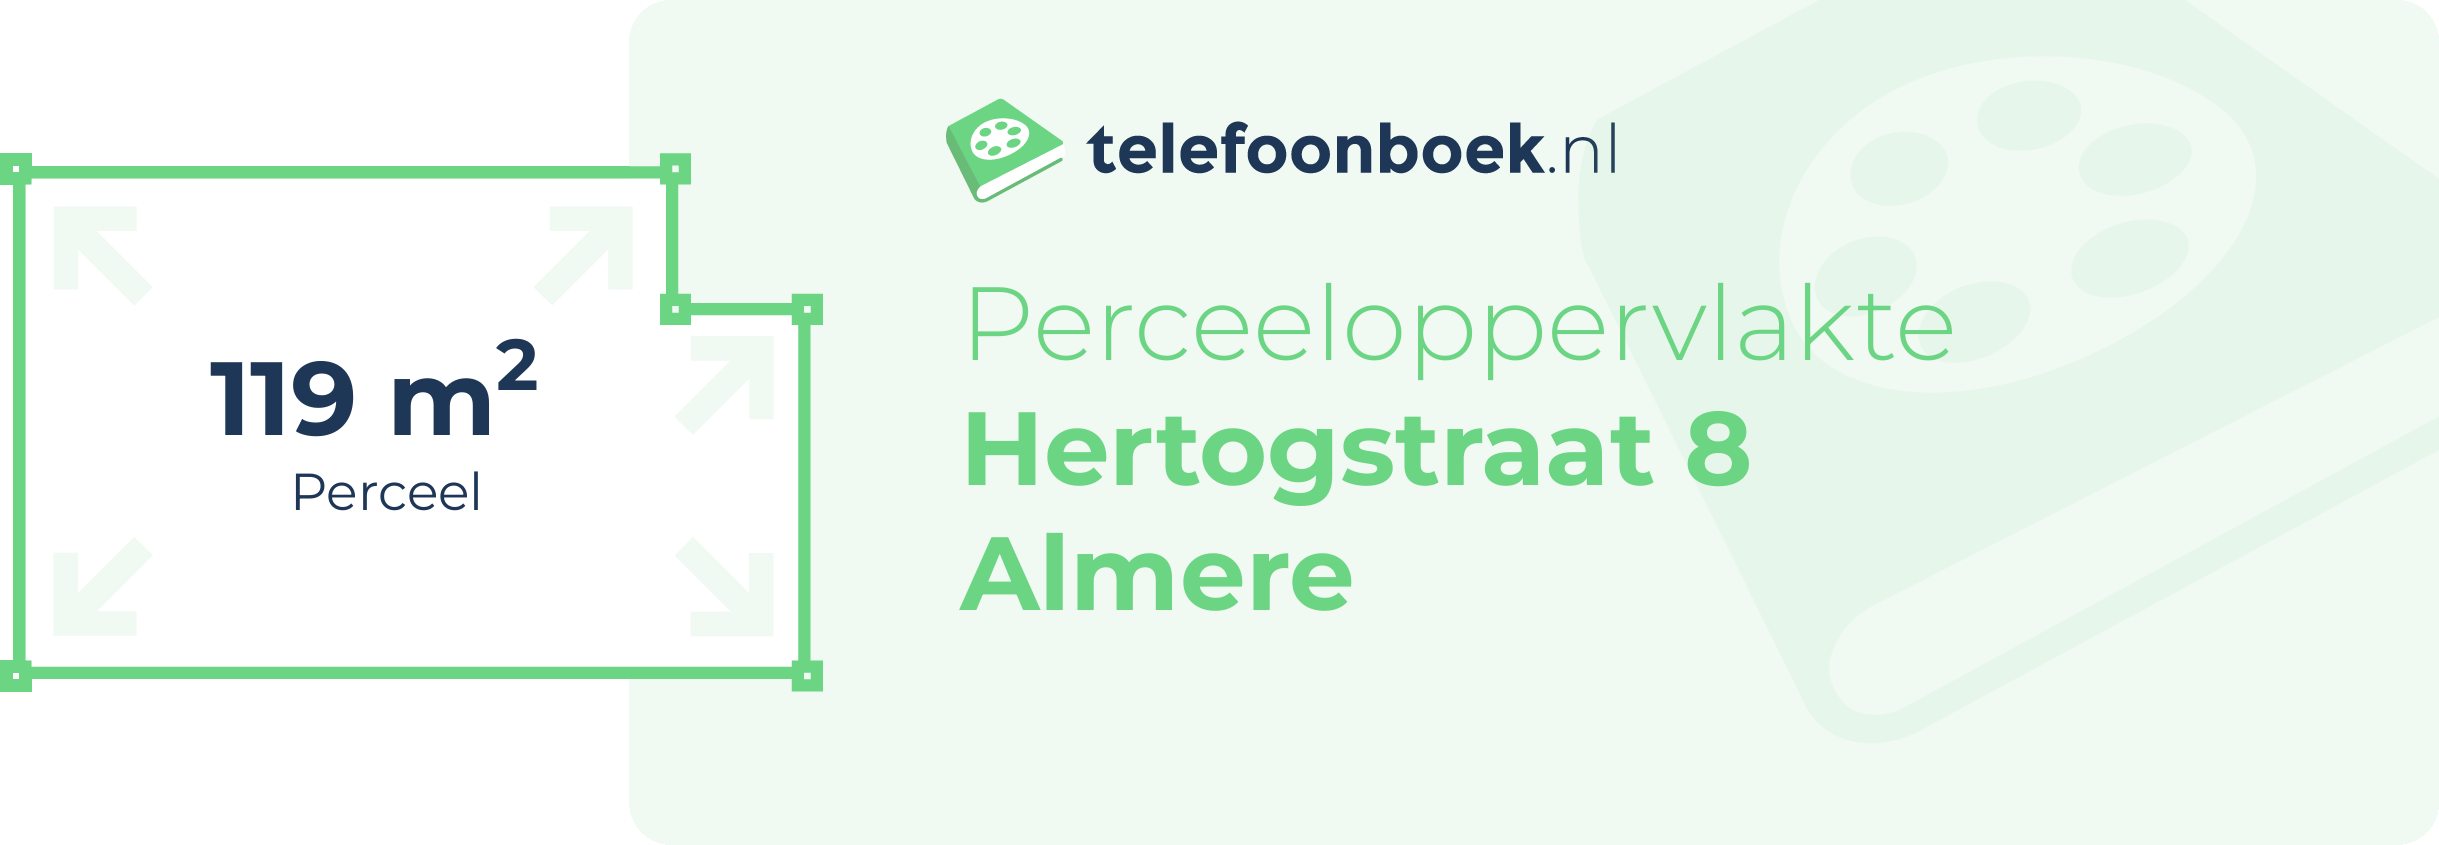 Perceeloppervlakte Hertogstraat 8 Almere